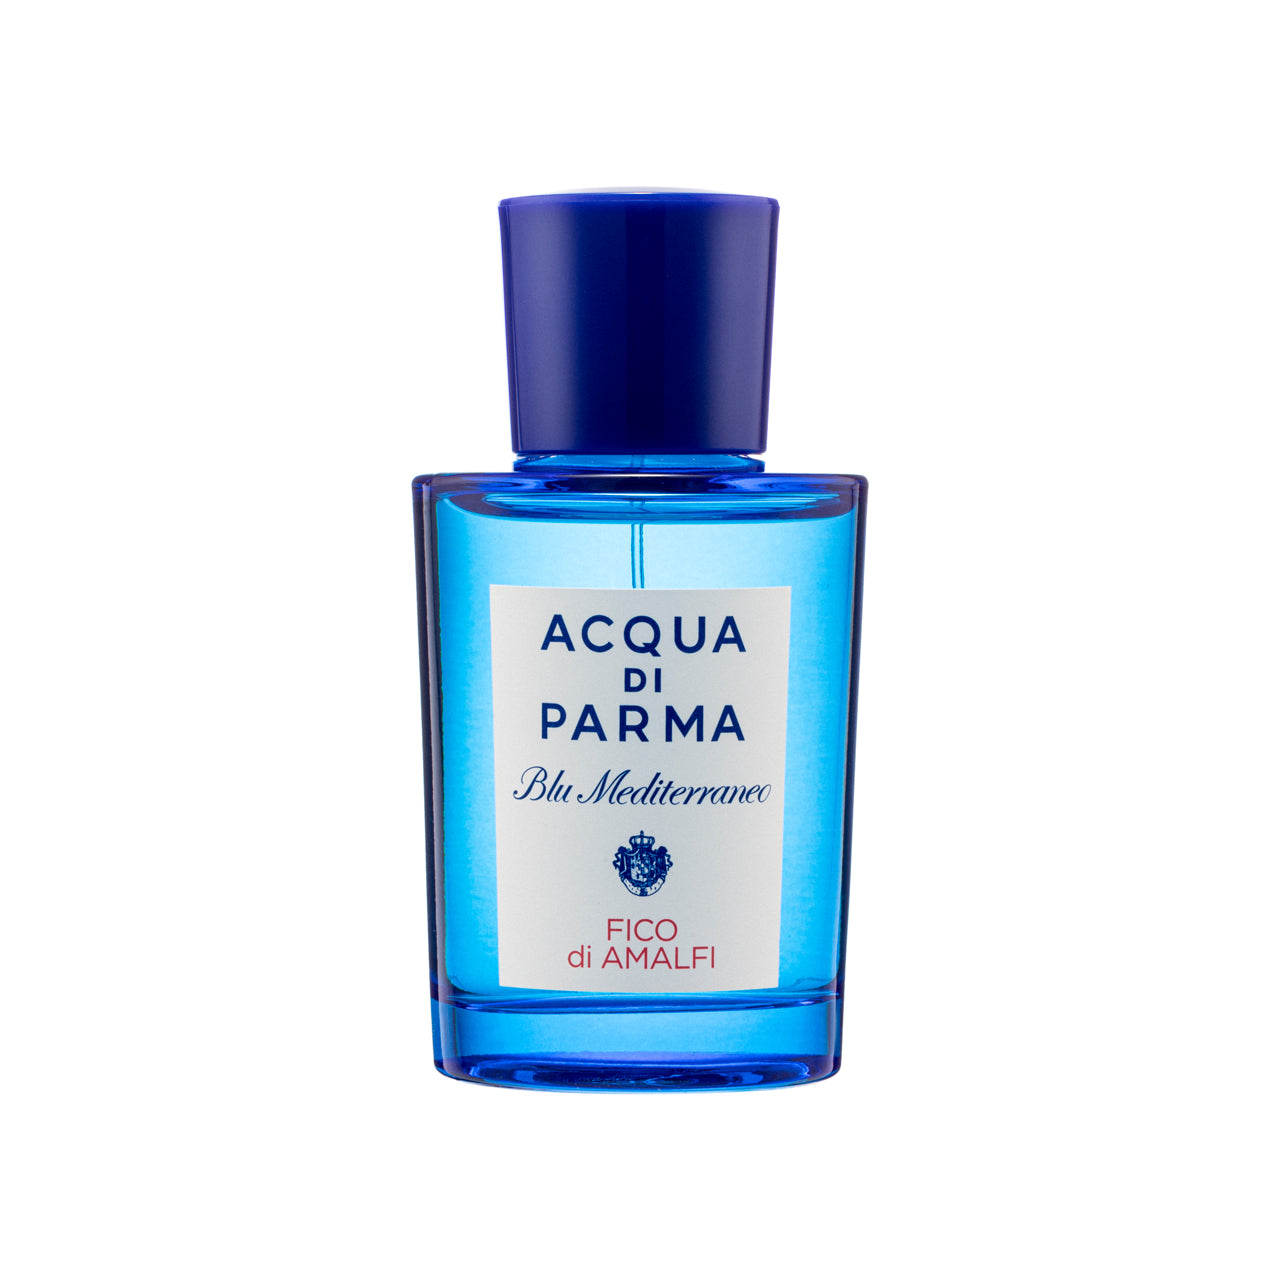 Acqua Di Parma Blu Mediterraneo Fico Di Amalfi Eau De Toilette Spray (